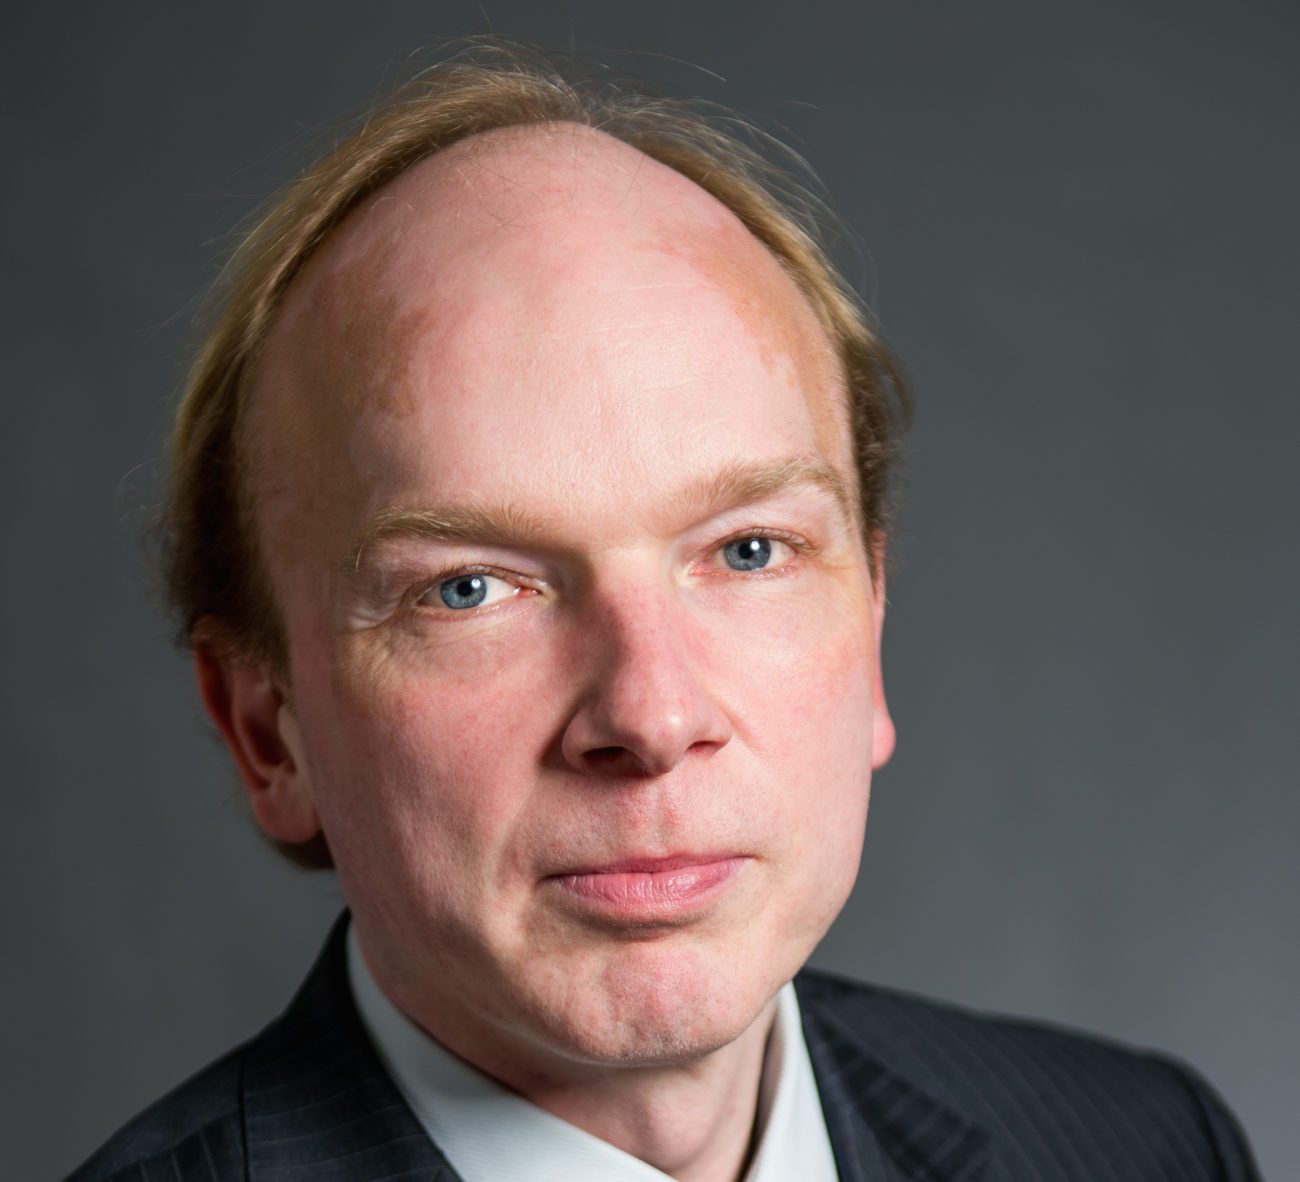 EGBA Secretary General Maarten Haijer on Sweden: The Gambling Monopoly  Needs to Change”